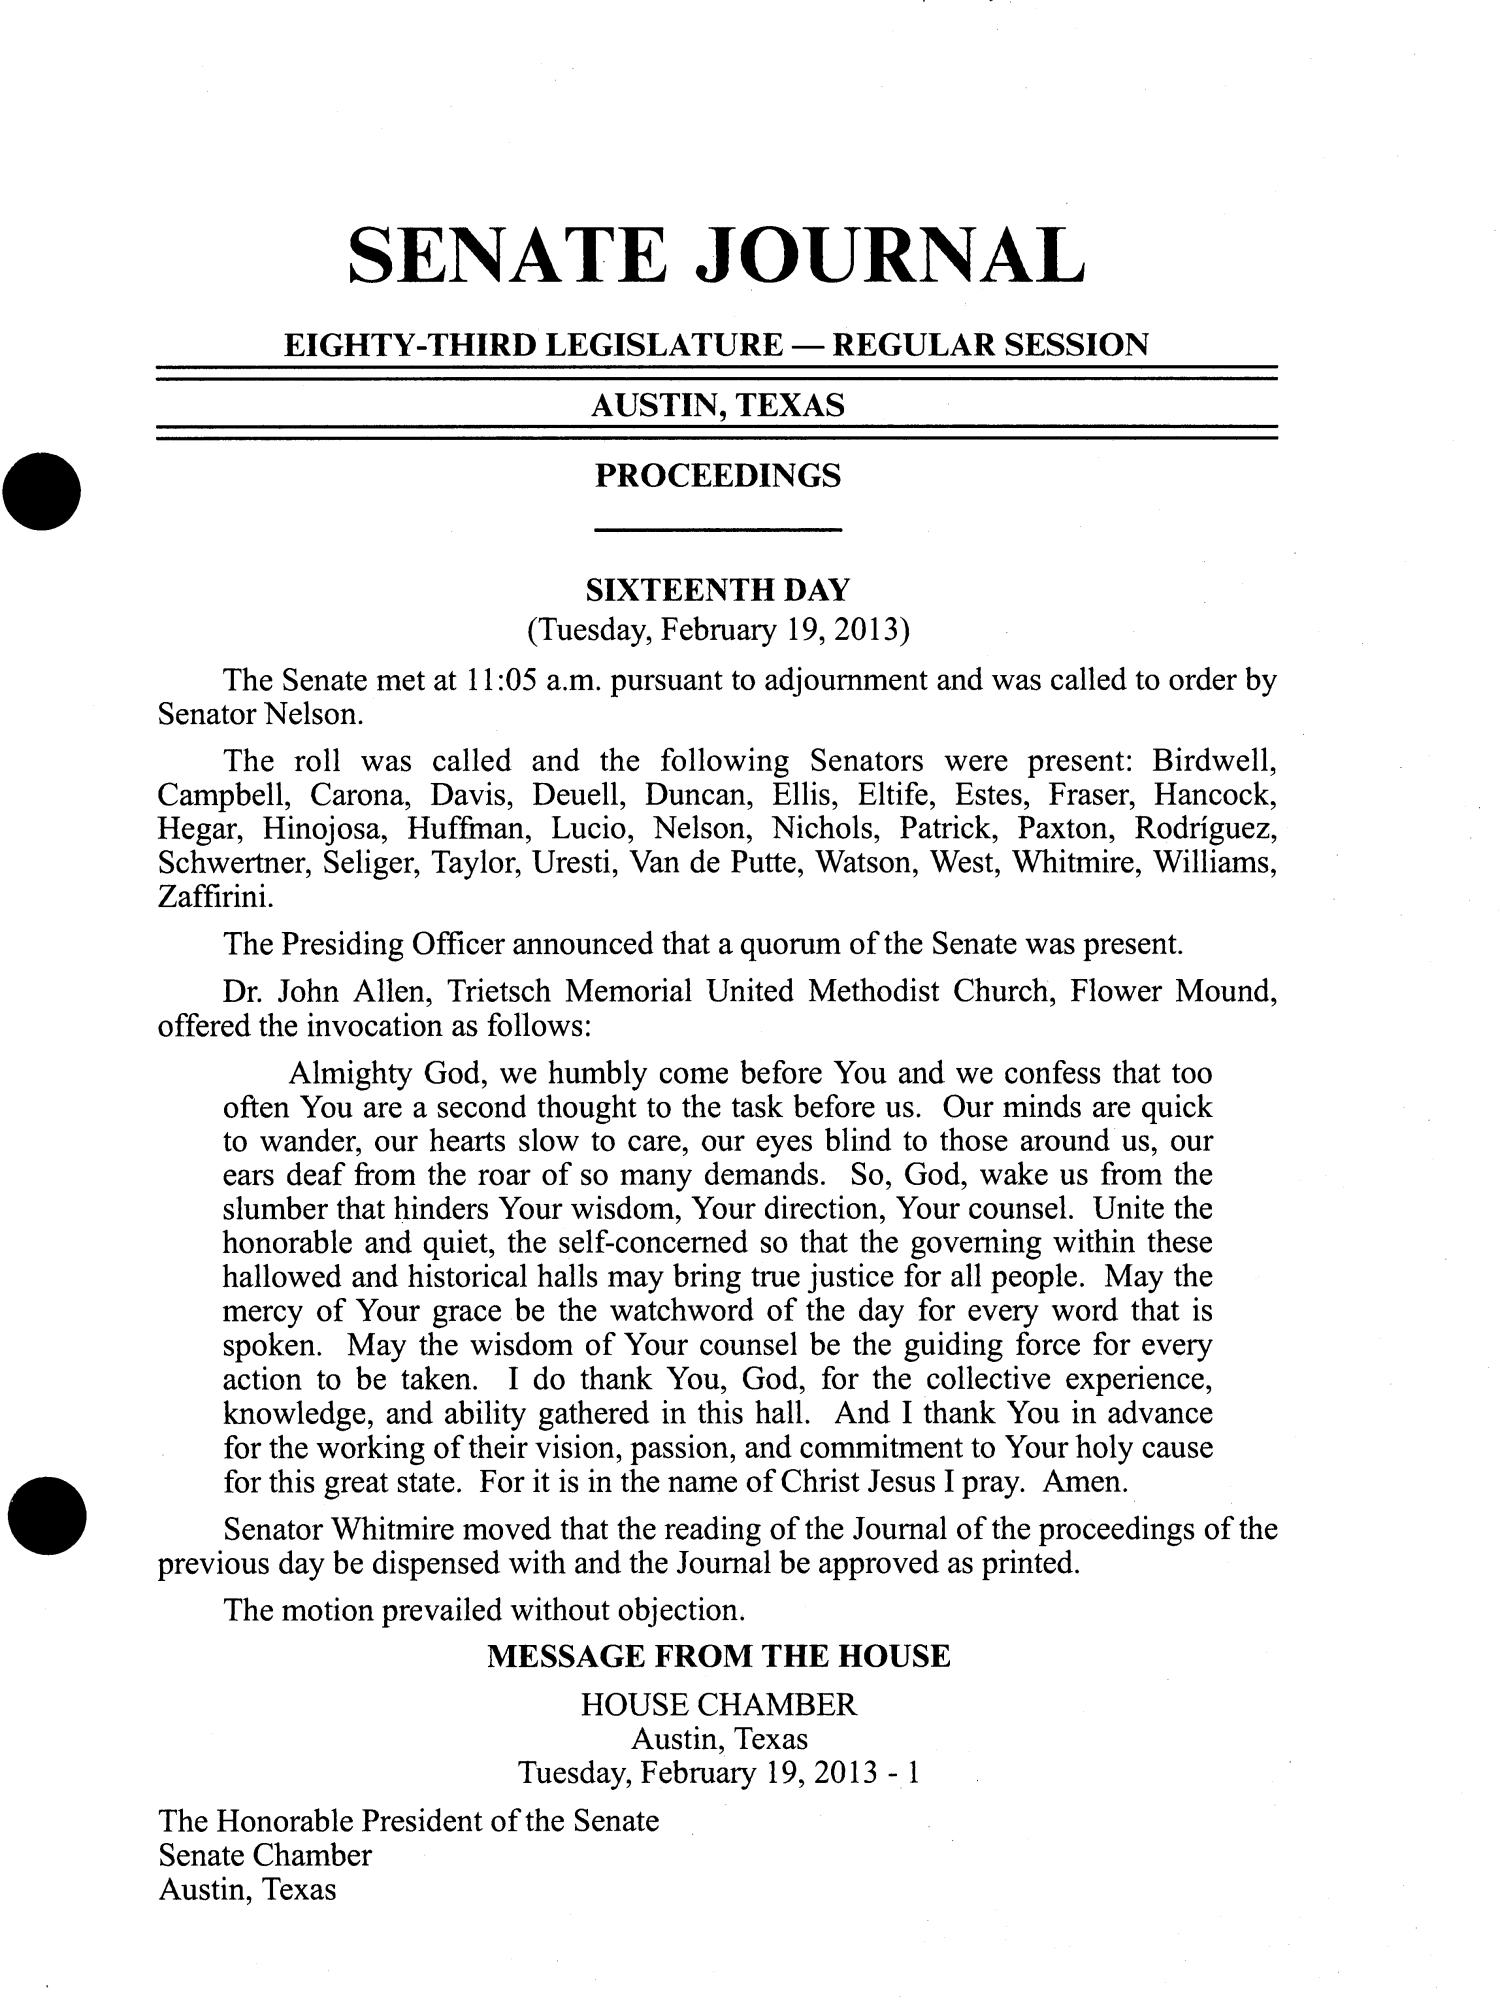 Journal of the Senate of Texas: 83rd Legislature, Regular Session, Tuesday, February 19, 2013
                                                
                                                    237
                                                